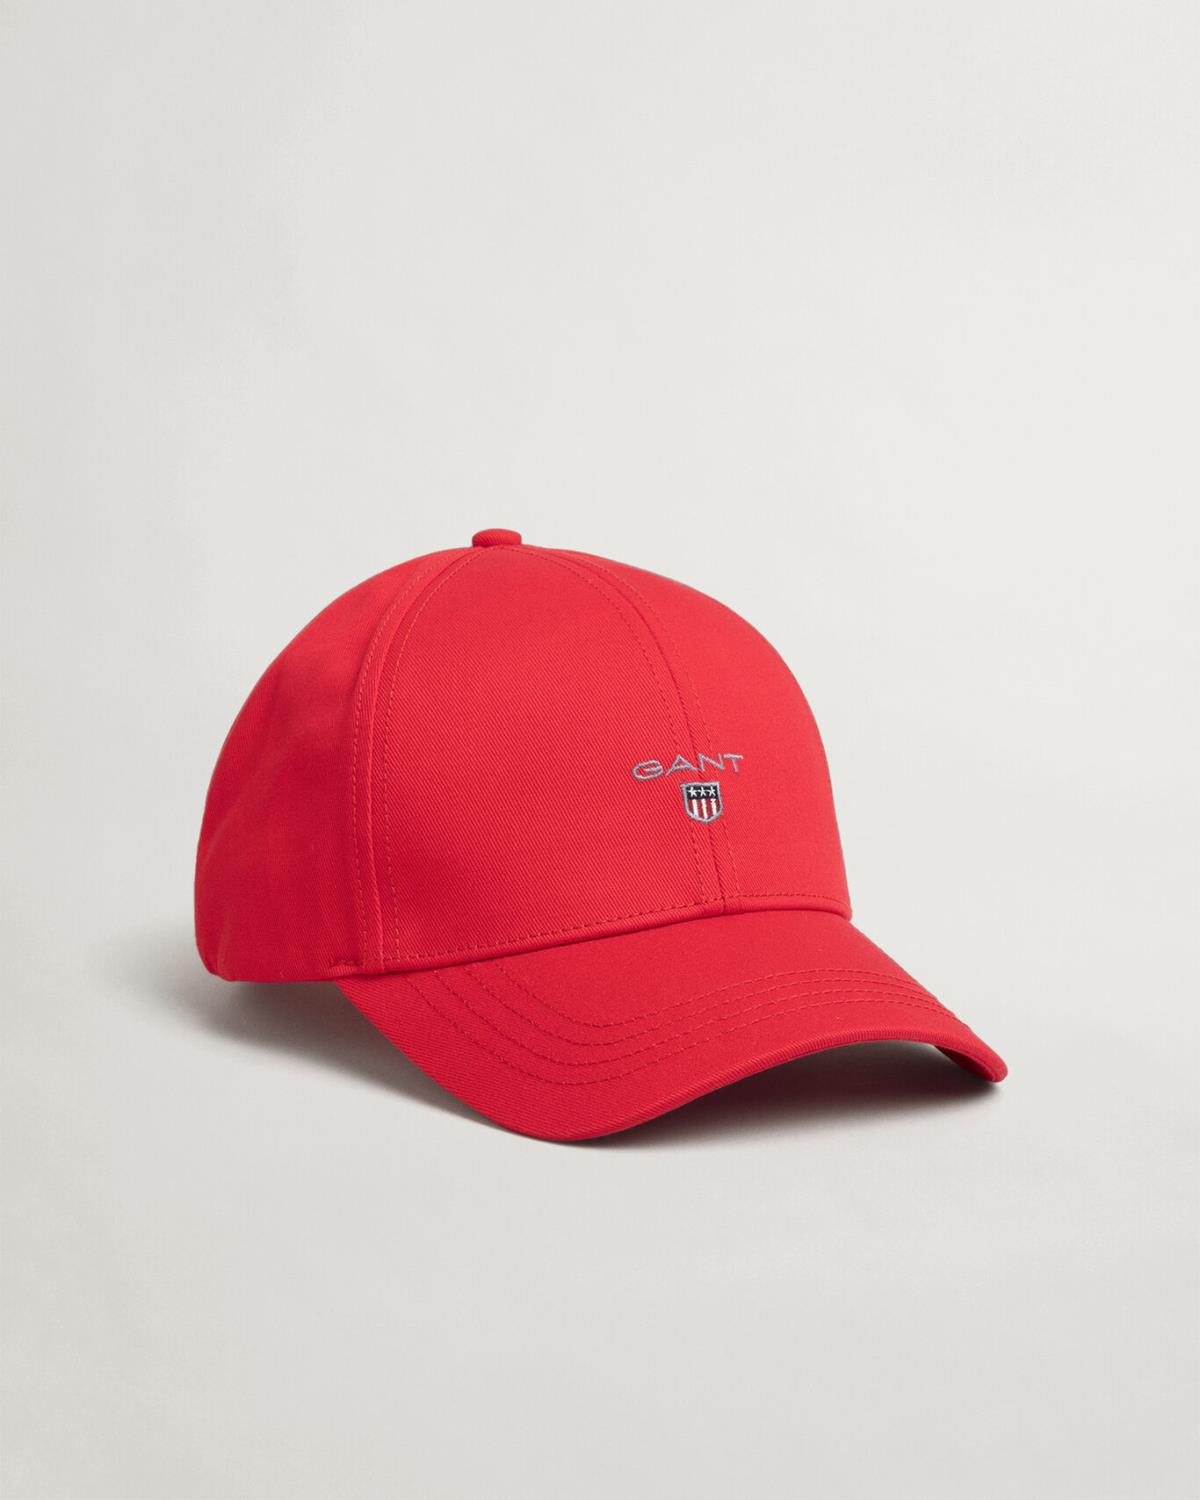 Gant HIGH COTTON TWILL CAP BRIGHT RED